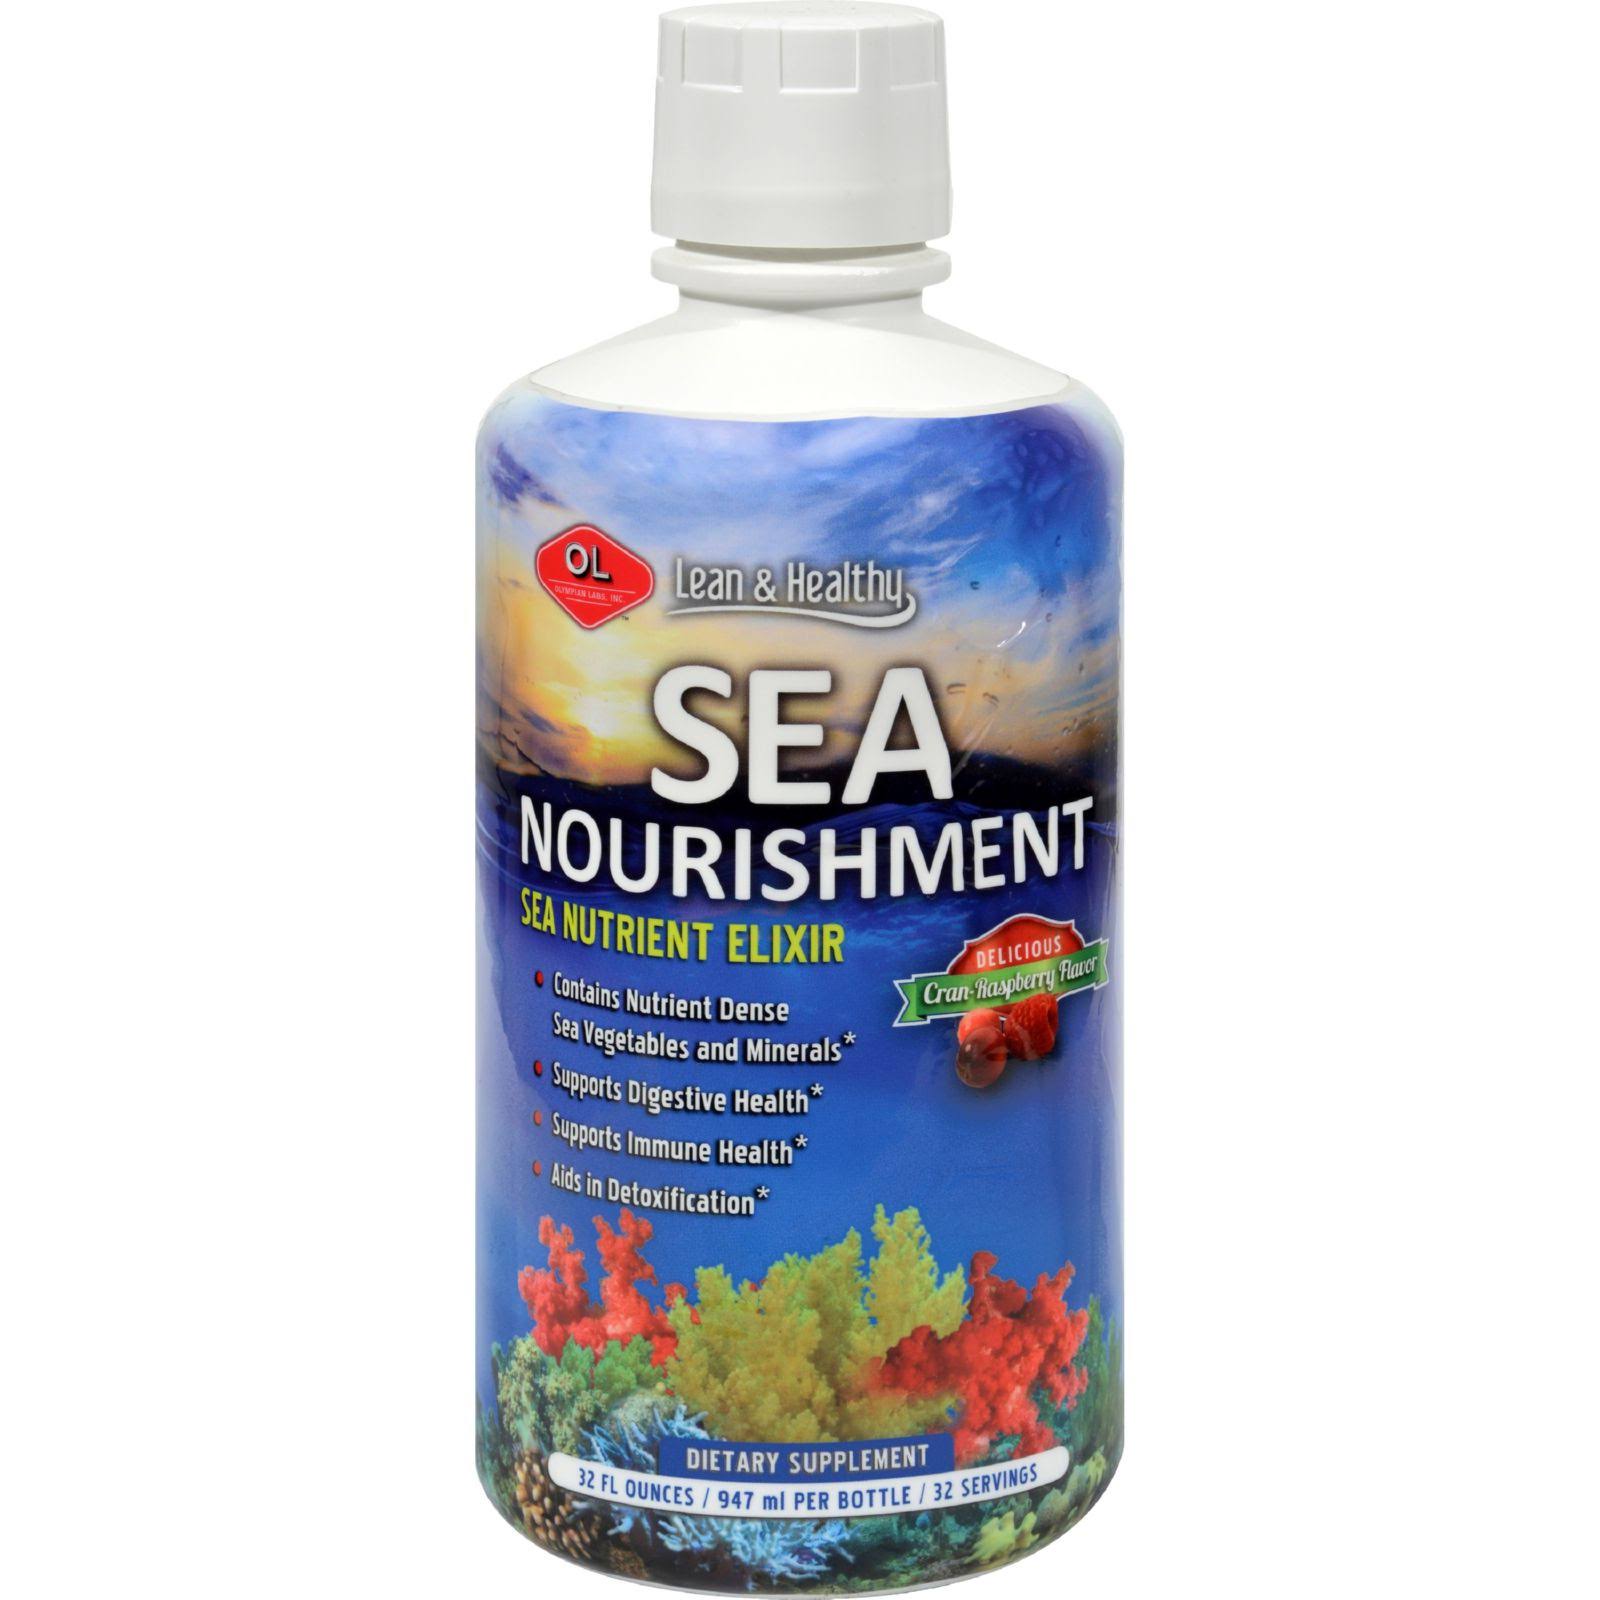 Olympian Labs Sea Nourishment Coral Calcium Vitamin Supplement - Cran/Raspberry, 32oz